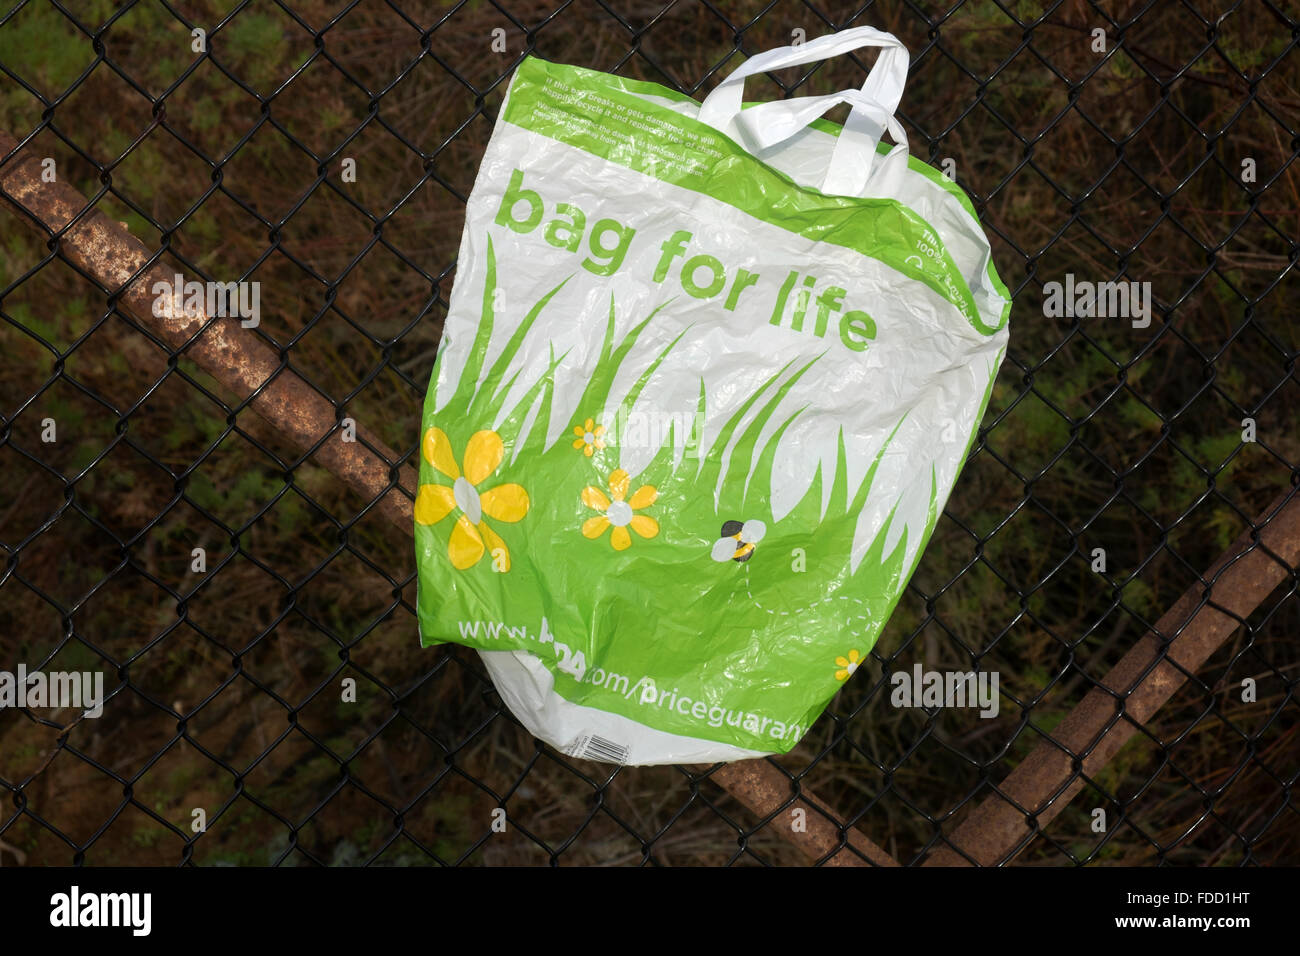 Asda supermarket 'Bag for life' Stock Photo - Alamy